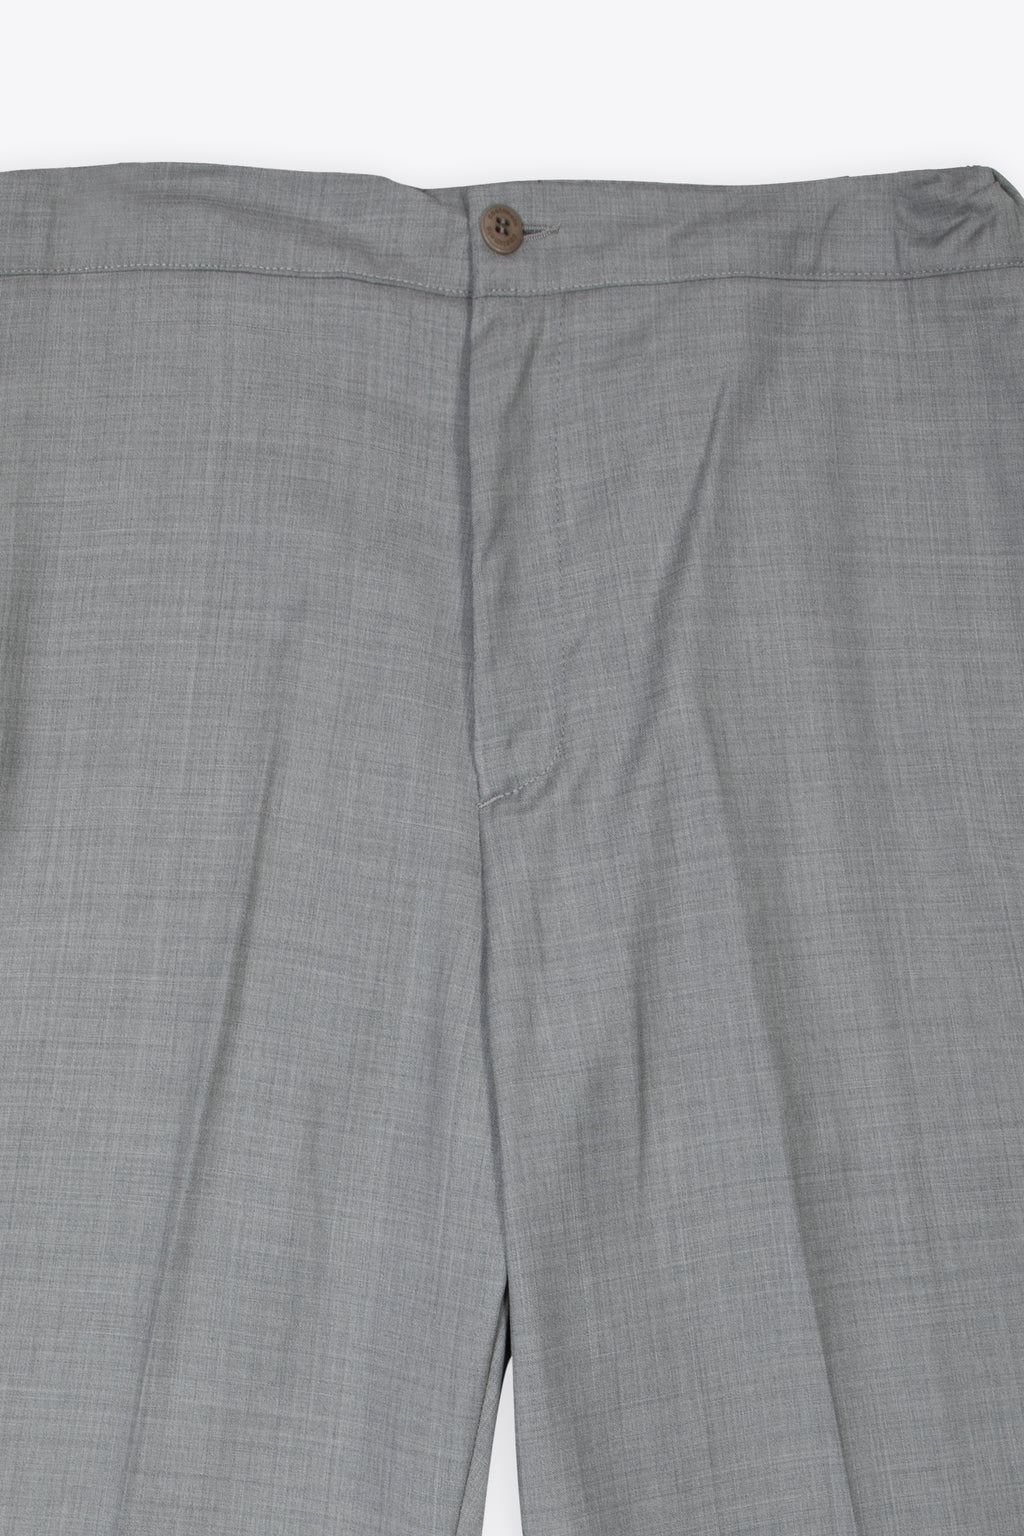 alt-image__Light-grey-wool-tailored-pant---Jean-19-Timisoara-